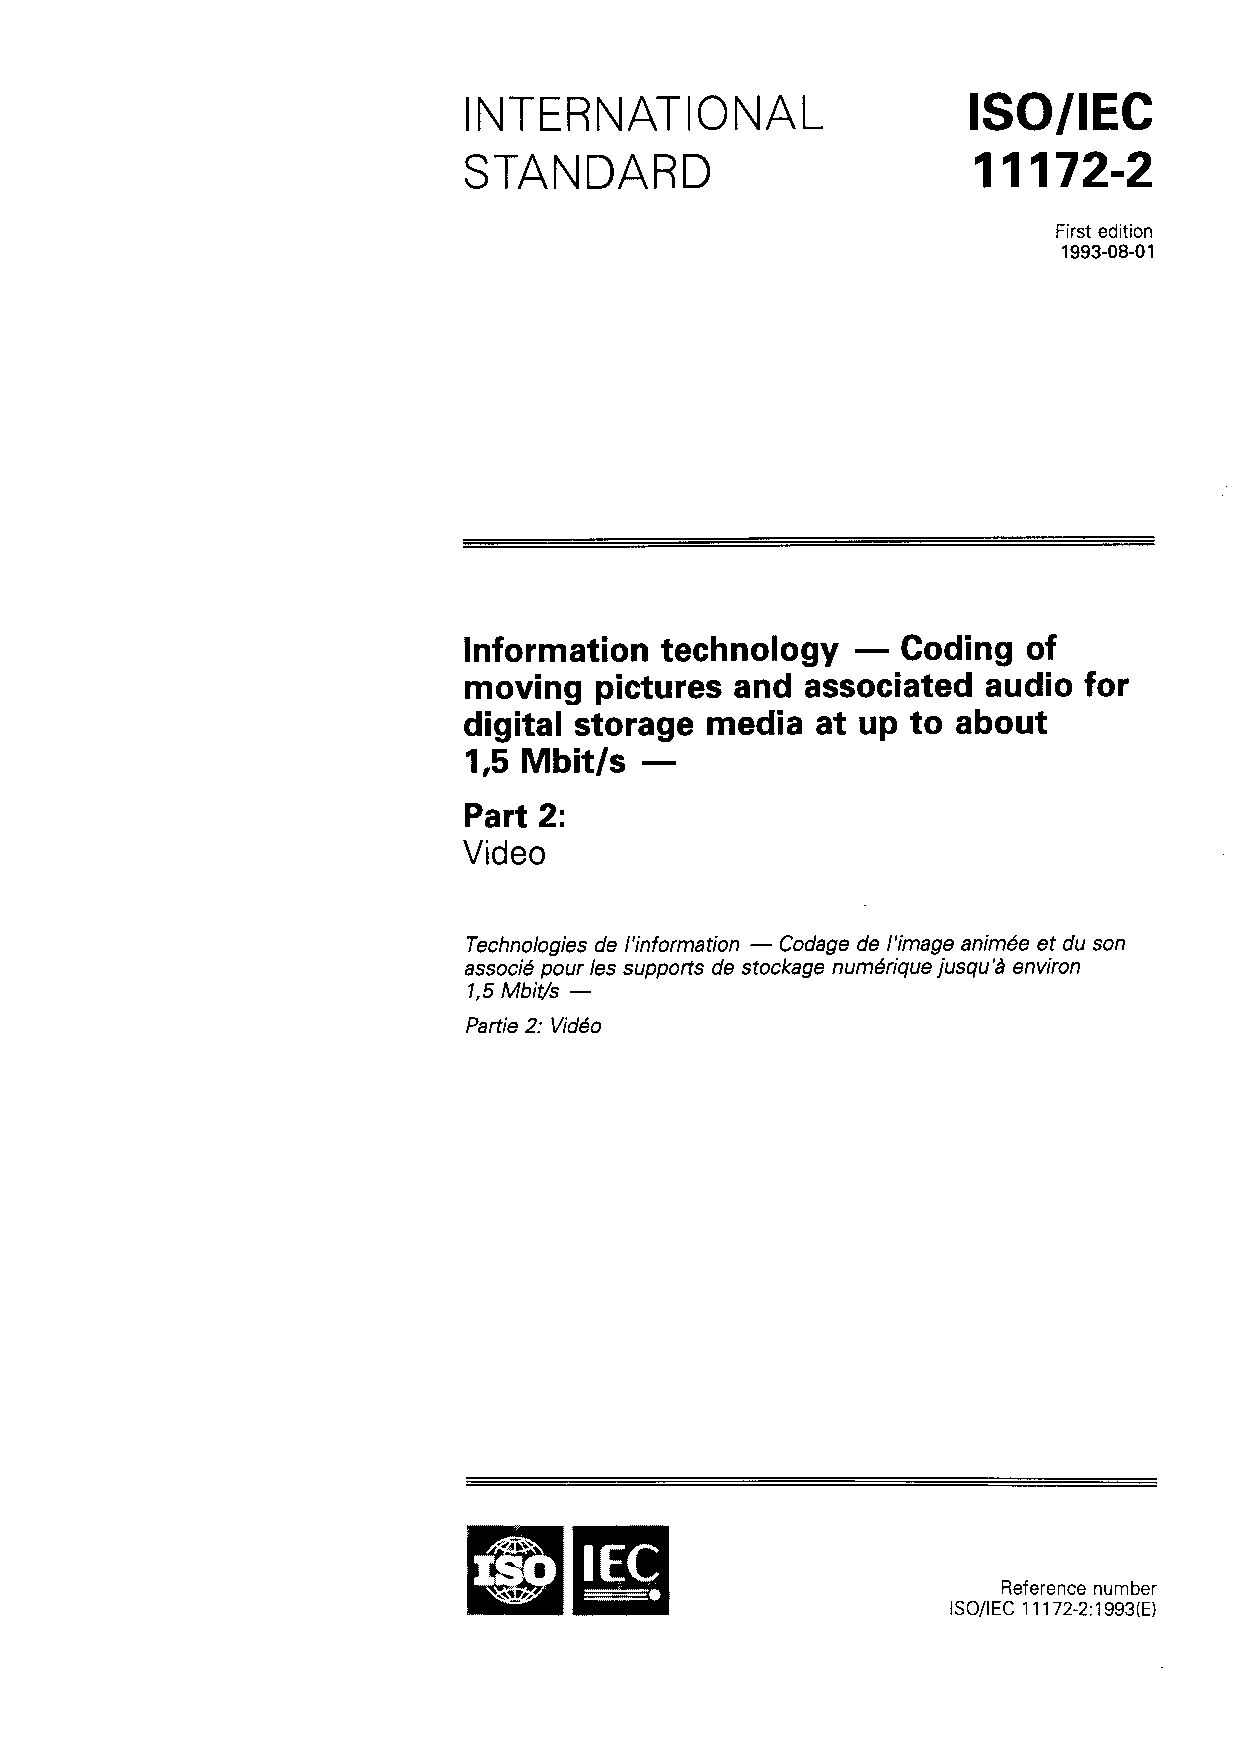 ISO/IEC 11172-2:1993